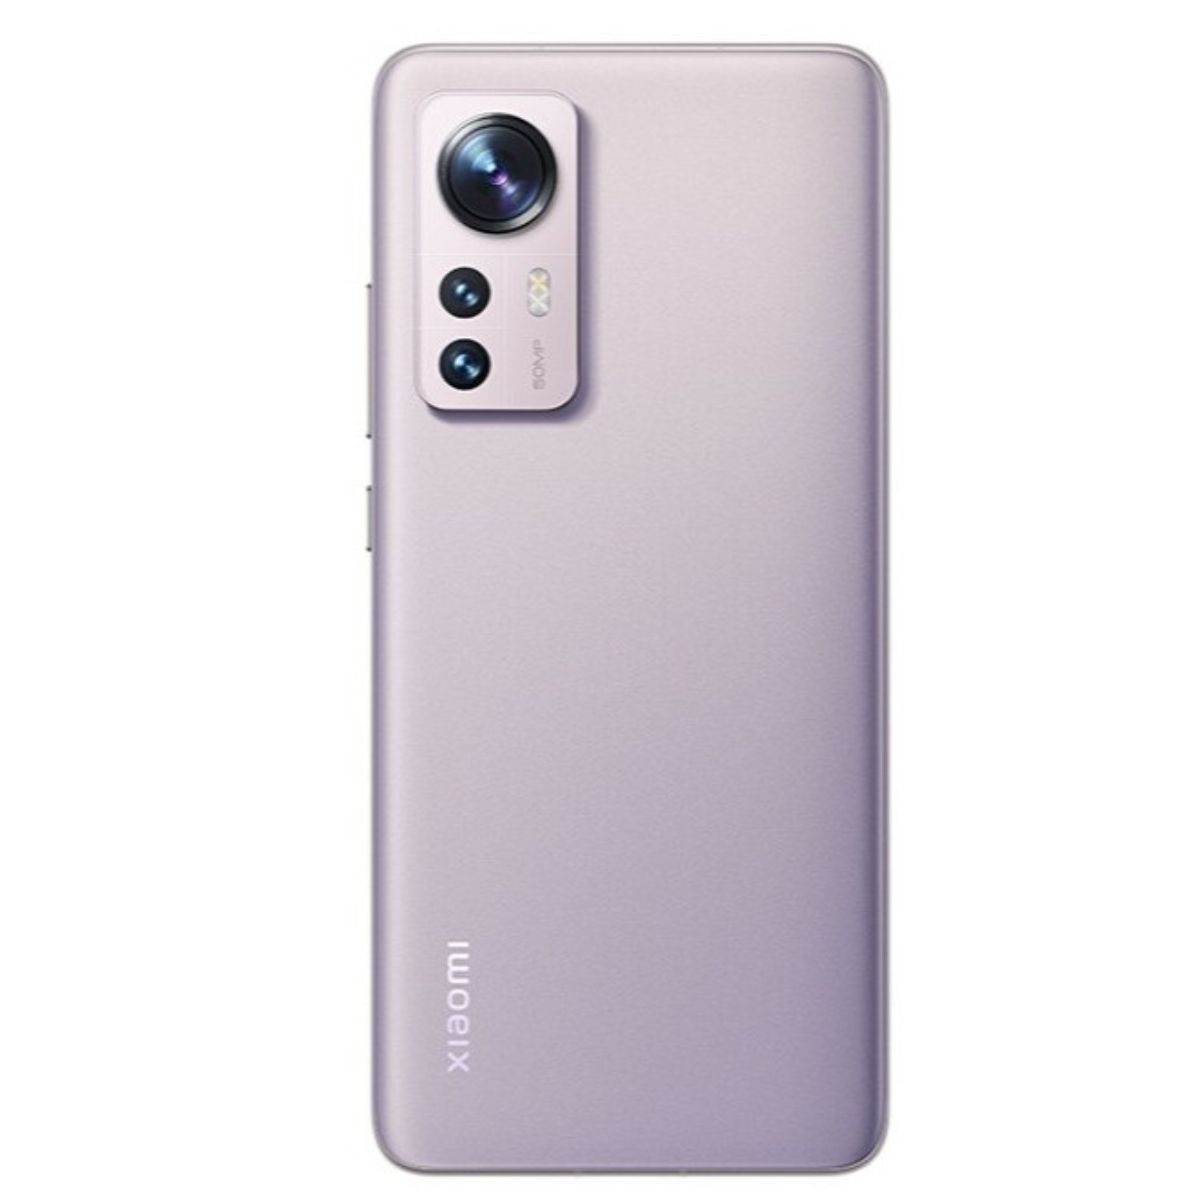 Xiaomi12 12/256 eu焼いてある purple